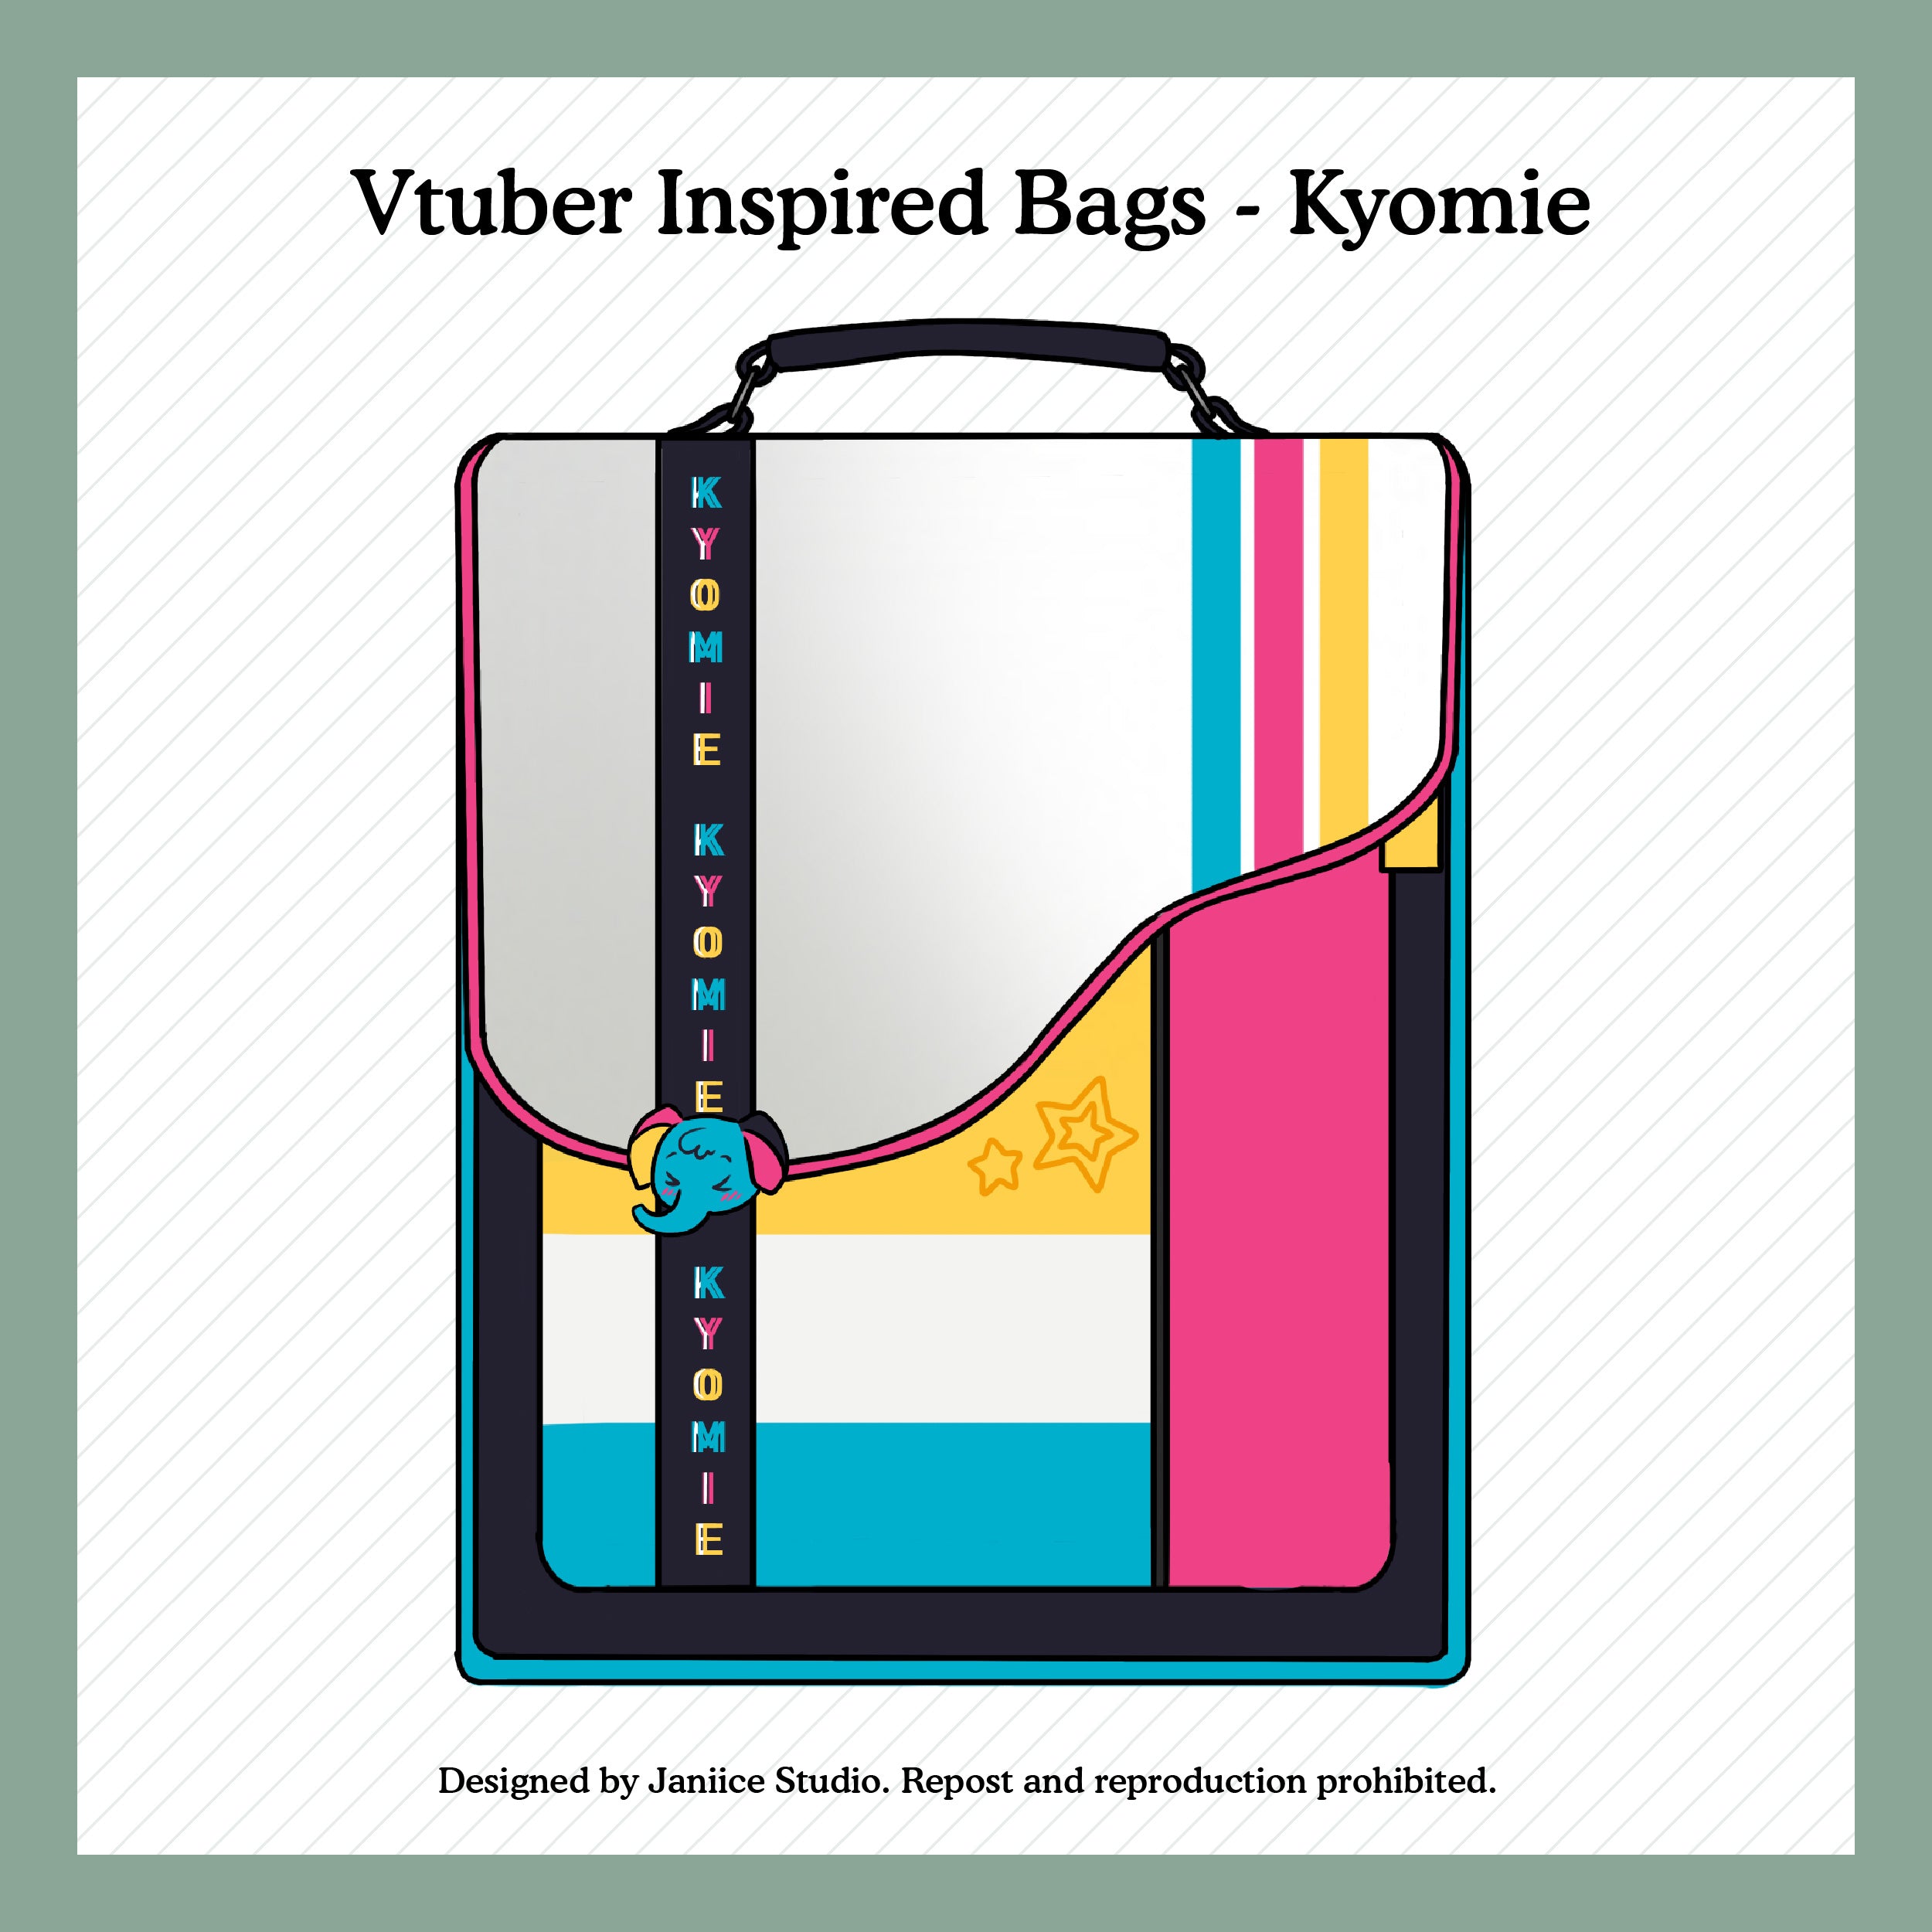 [PREORDER] Leftover Vtuber Inspired Bags